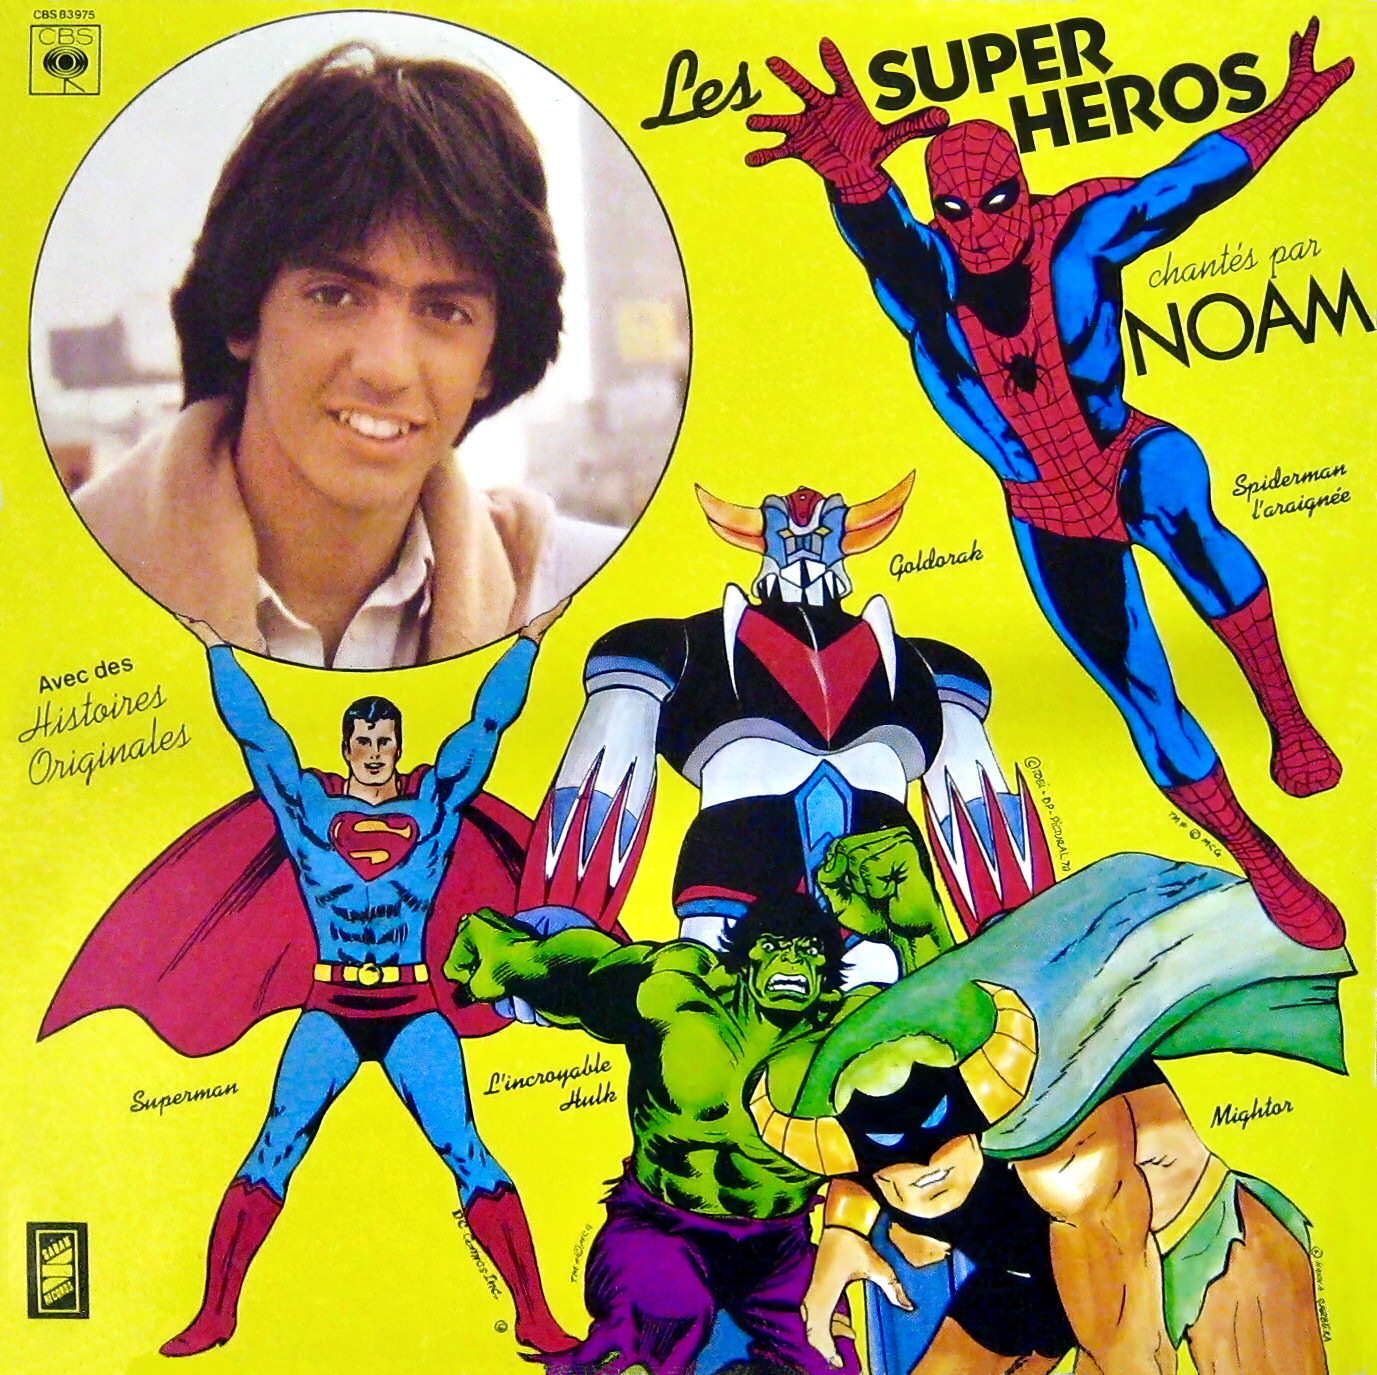 pochette 33 tours - Les Super Heros - Noam 